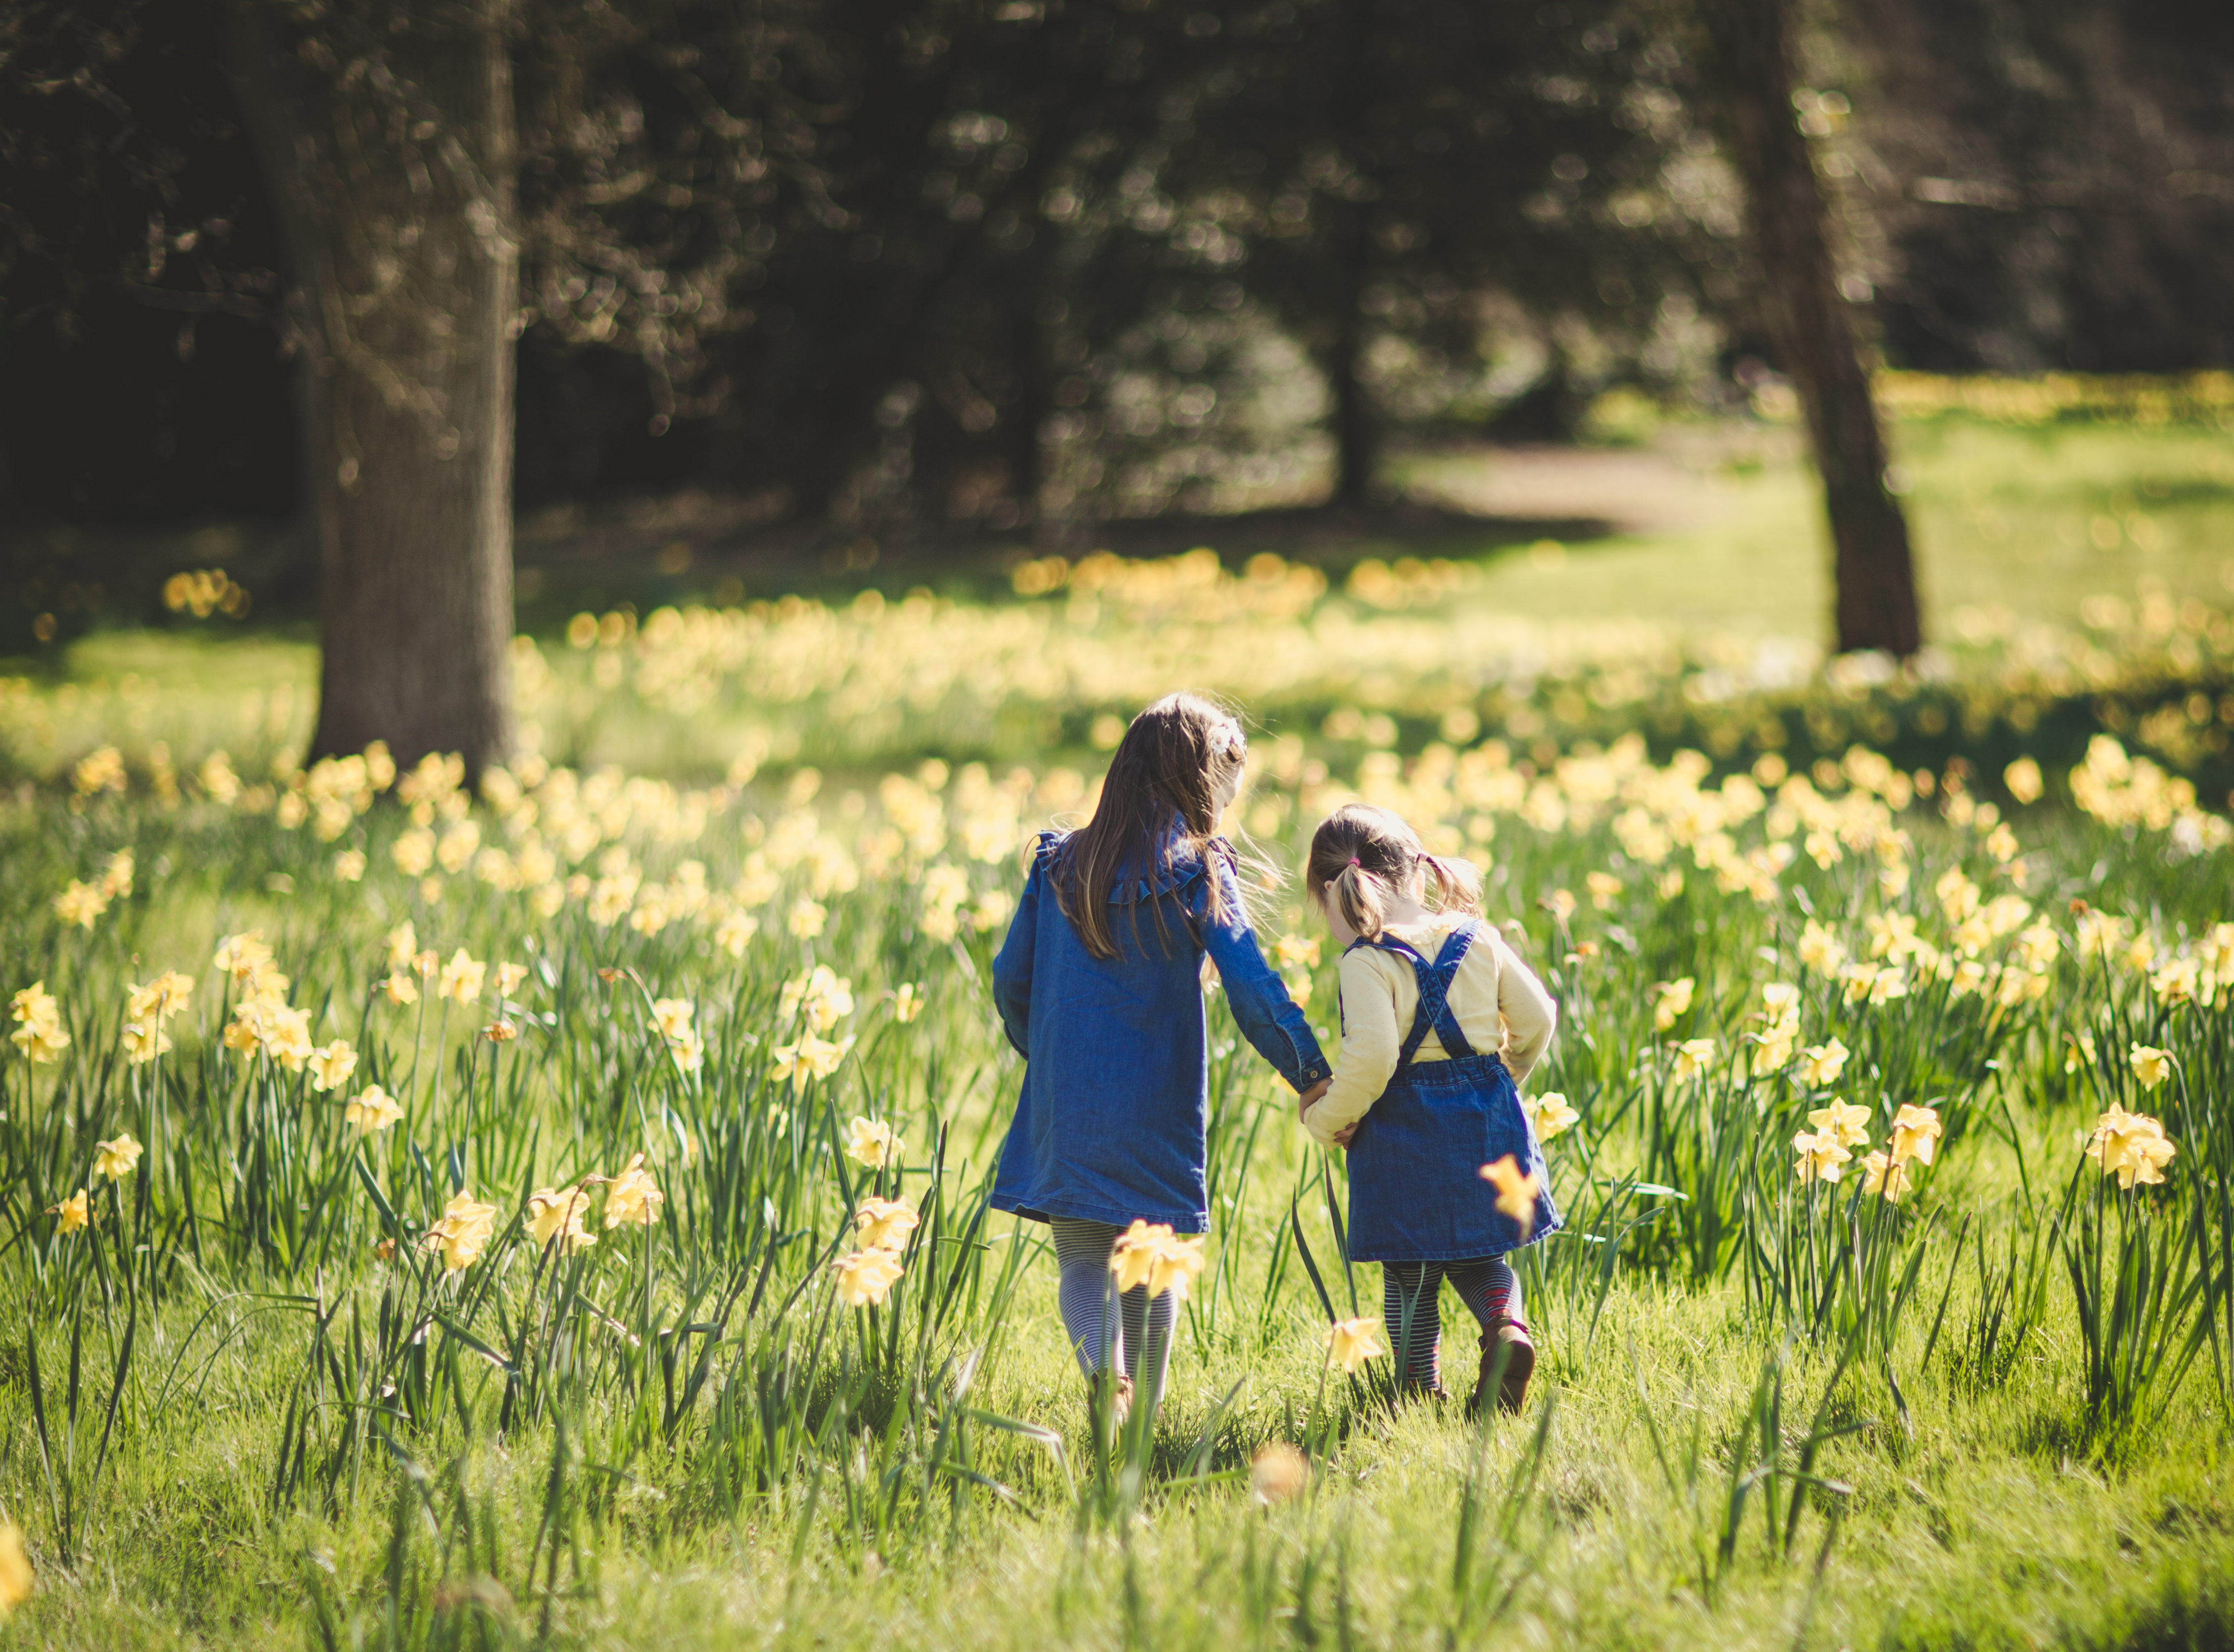 Exbury Gardens daffodils